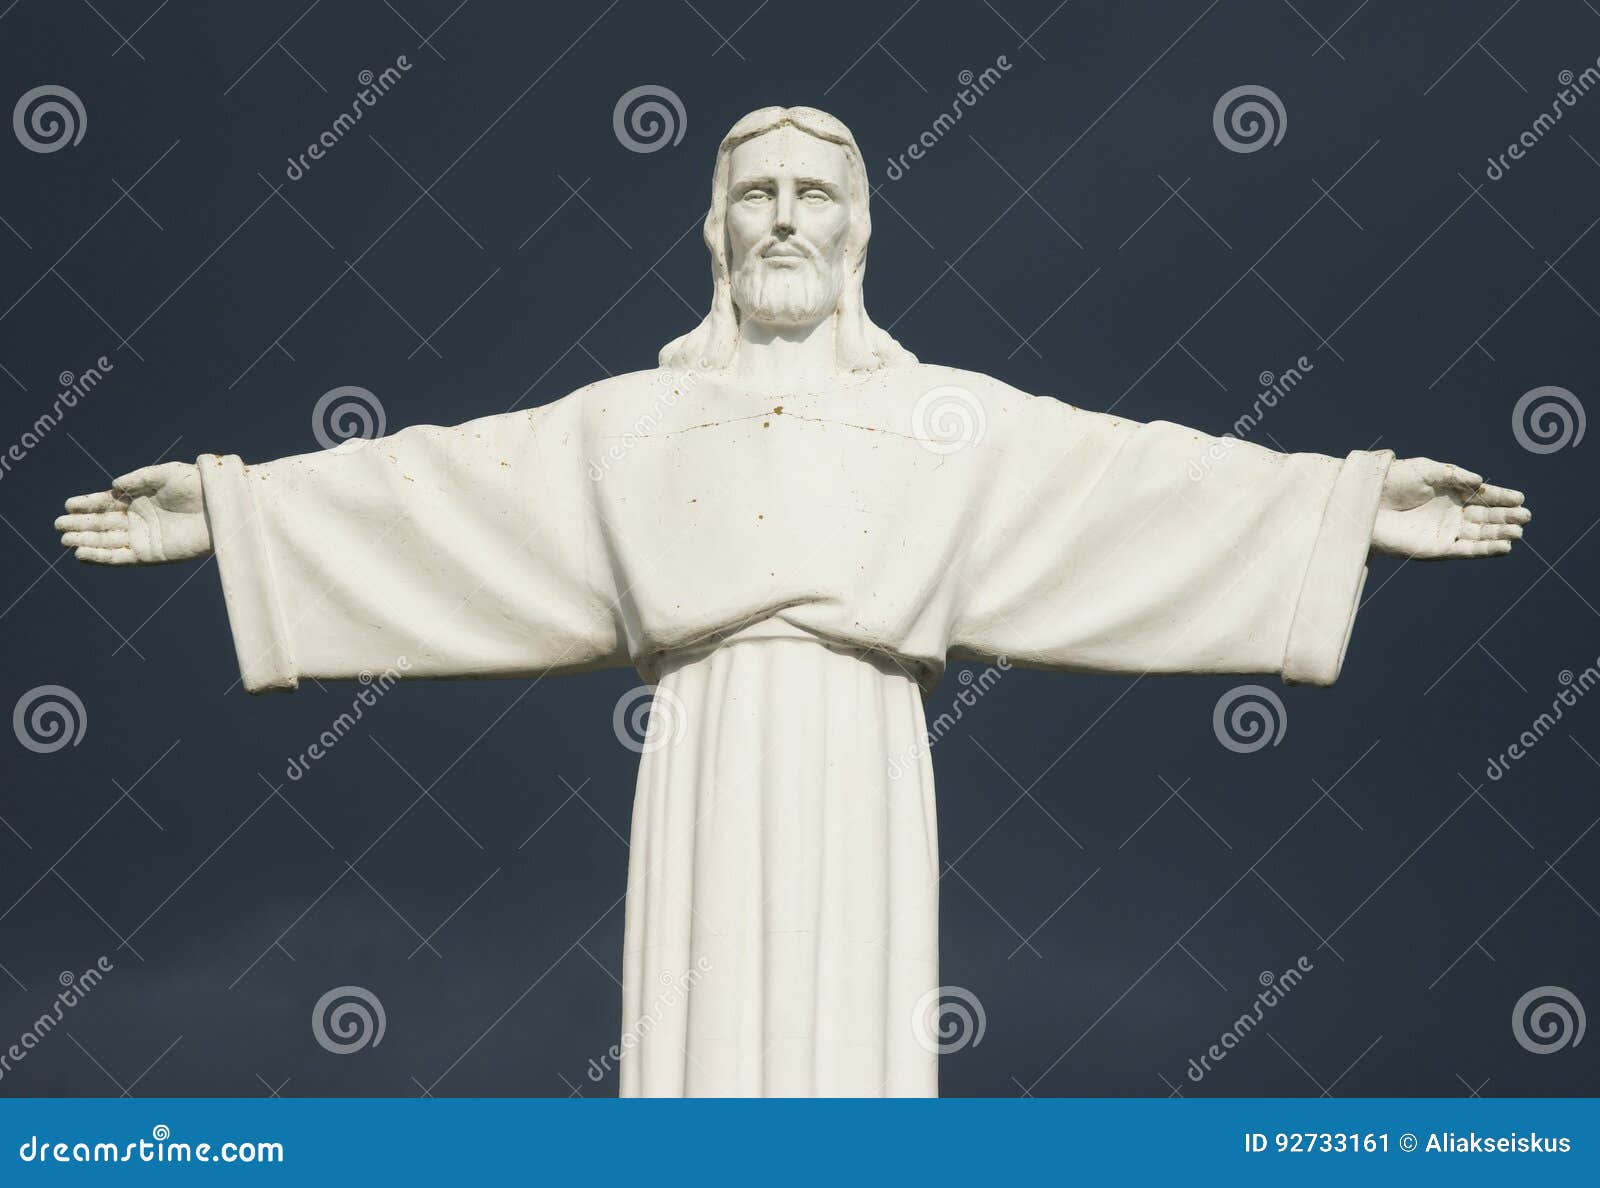 copy of the statue of jesus christ. cristo rei style.